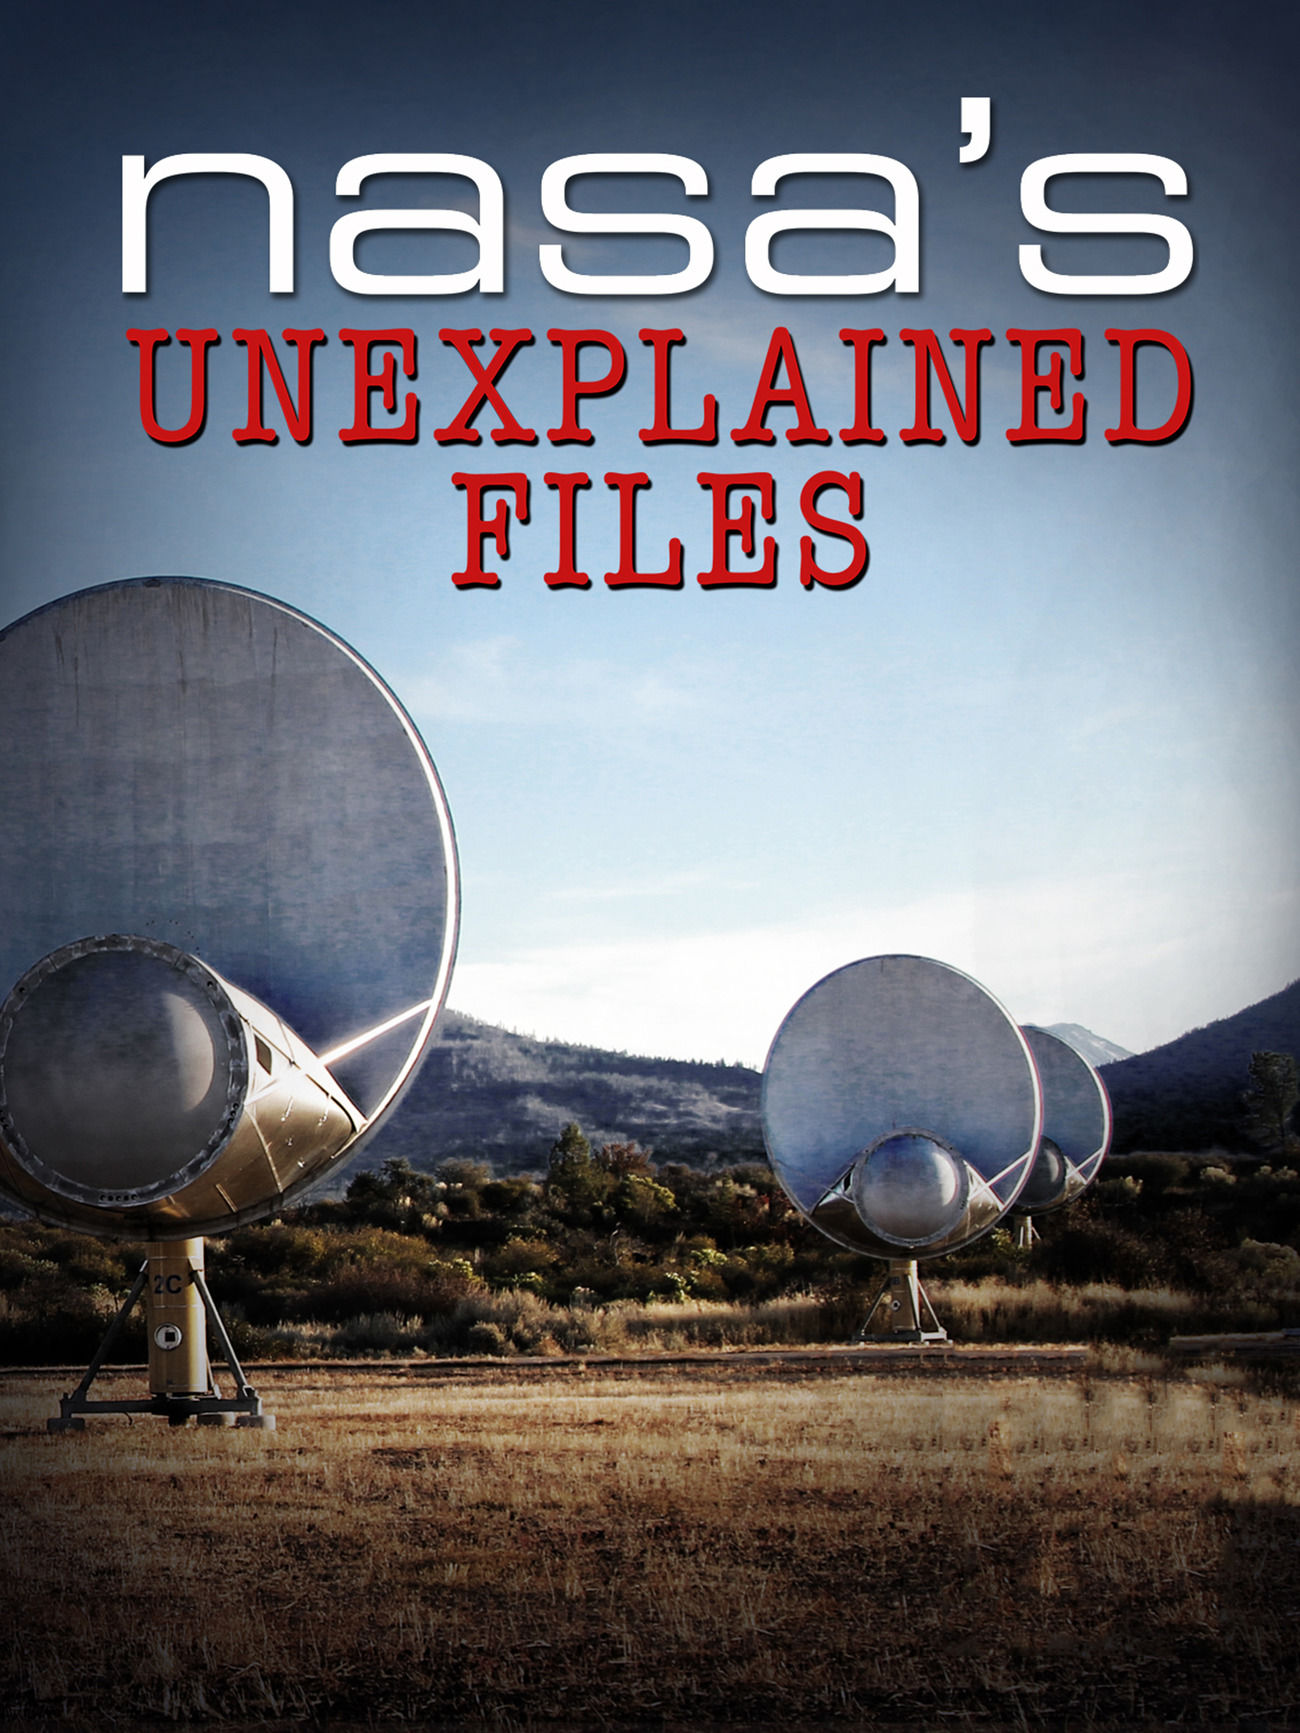 NASA's Unexplained Files | TVmaze